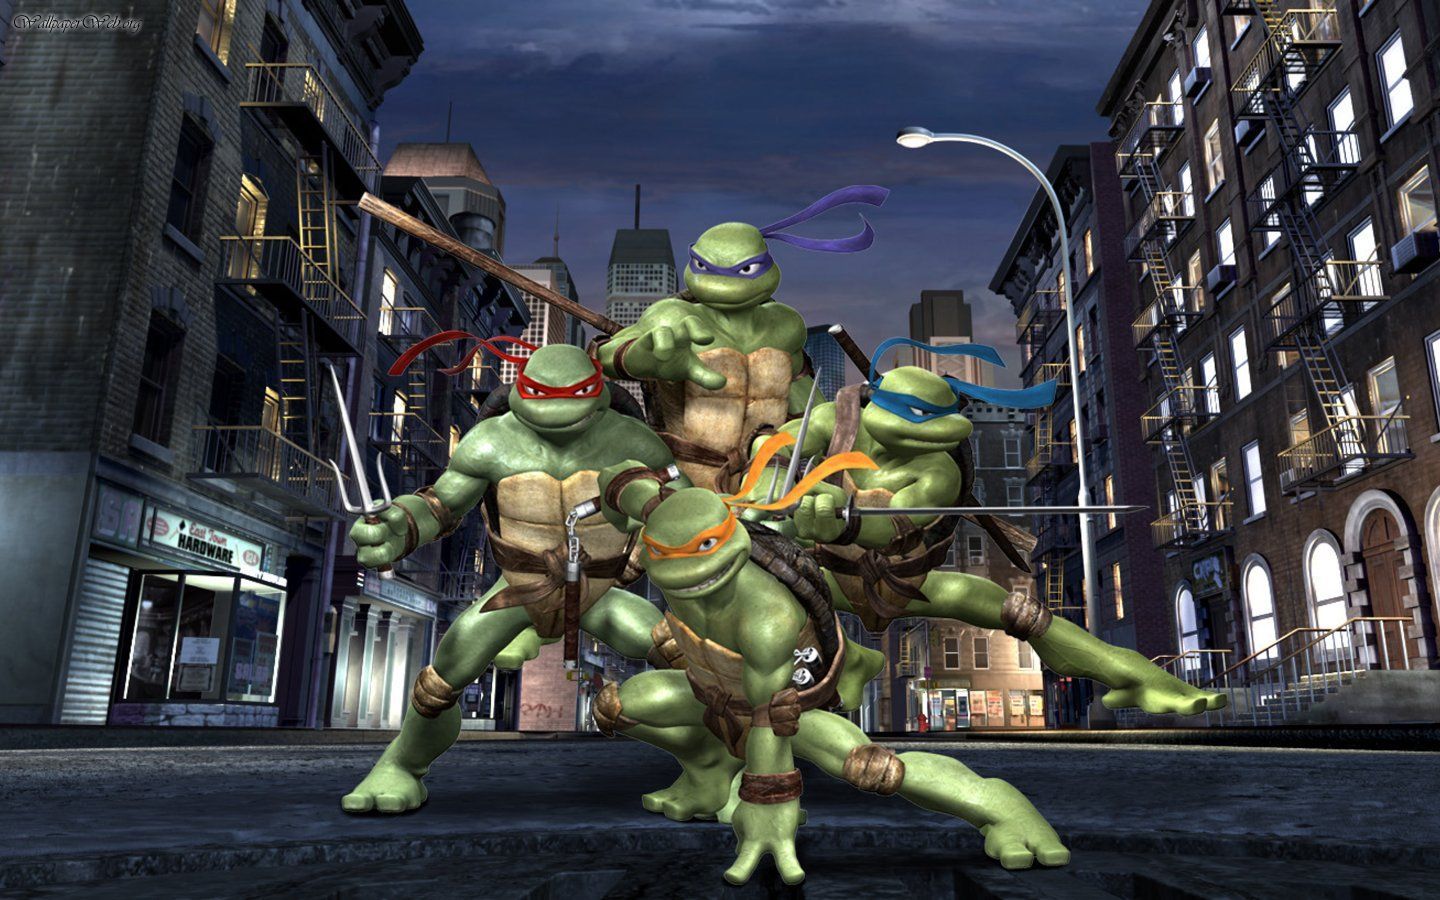 Teenage Mutant Ninja Turtles Villains Movie Series Coming to Paramount+